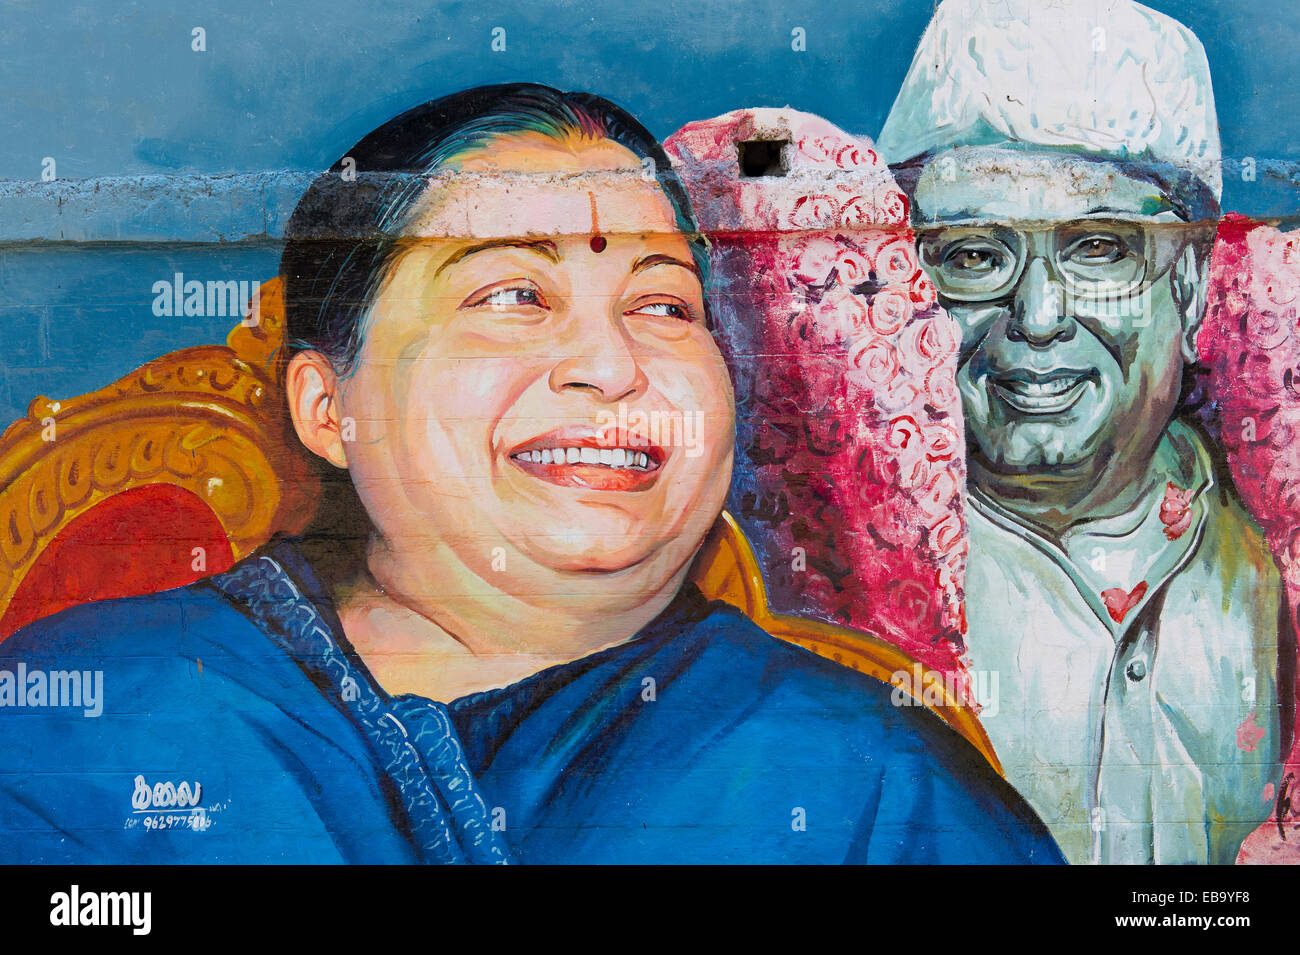 Wall painting depicting the Tamil actress and politician Jayalalithaa Jayaram, Madurai, Tamil Nadu, India Stock Photo